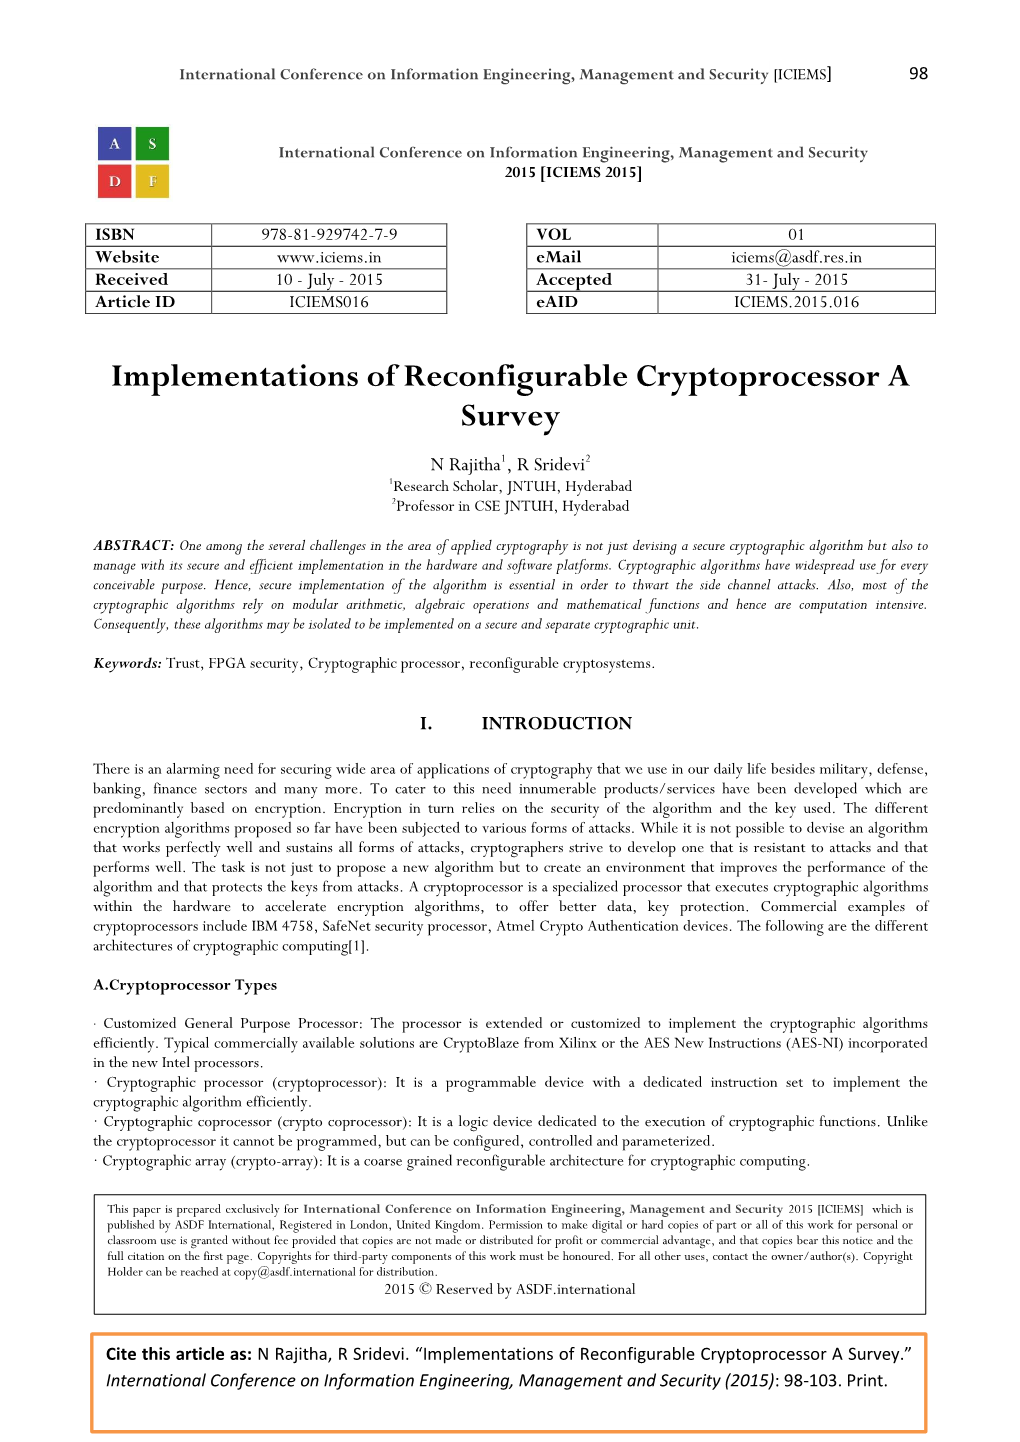 Implementations of Reconfigurable Cryptoprocessor a Survey N Rajitha1, R Sridevi2 1Research Scholar, JNTUH, Hyderabad 2Professor in CSE JNTUH, Hyderabad